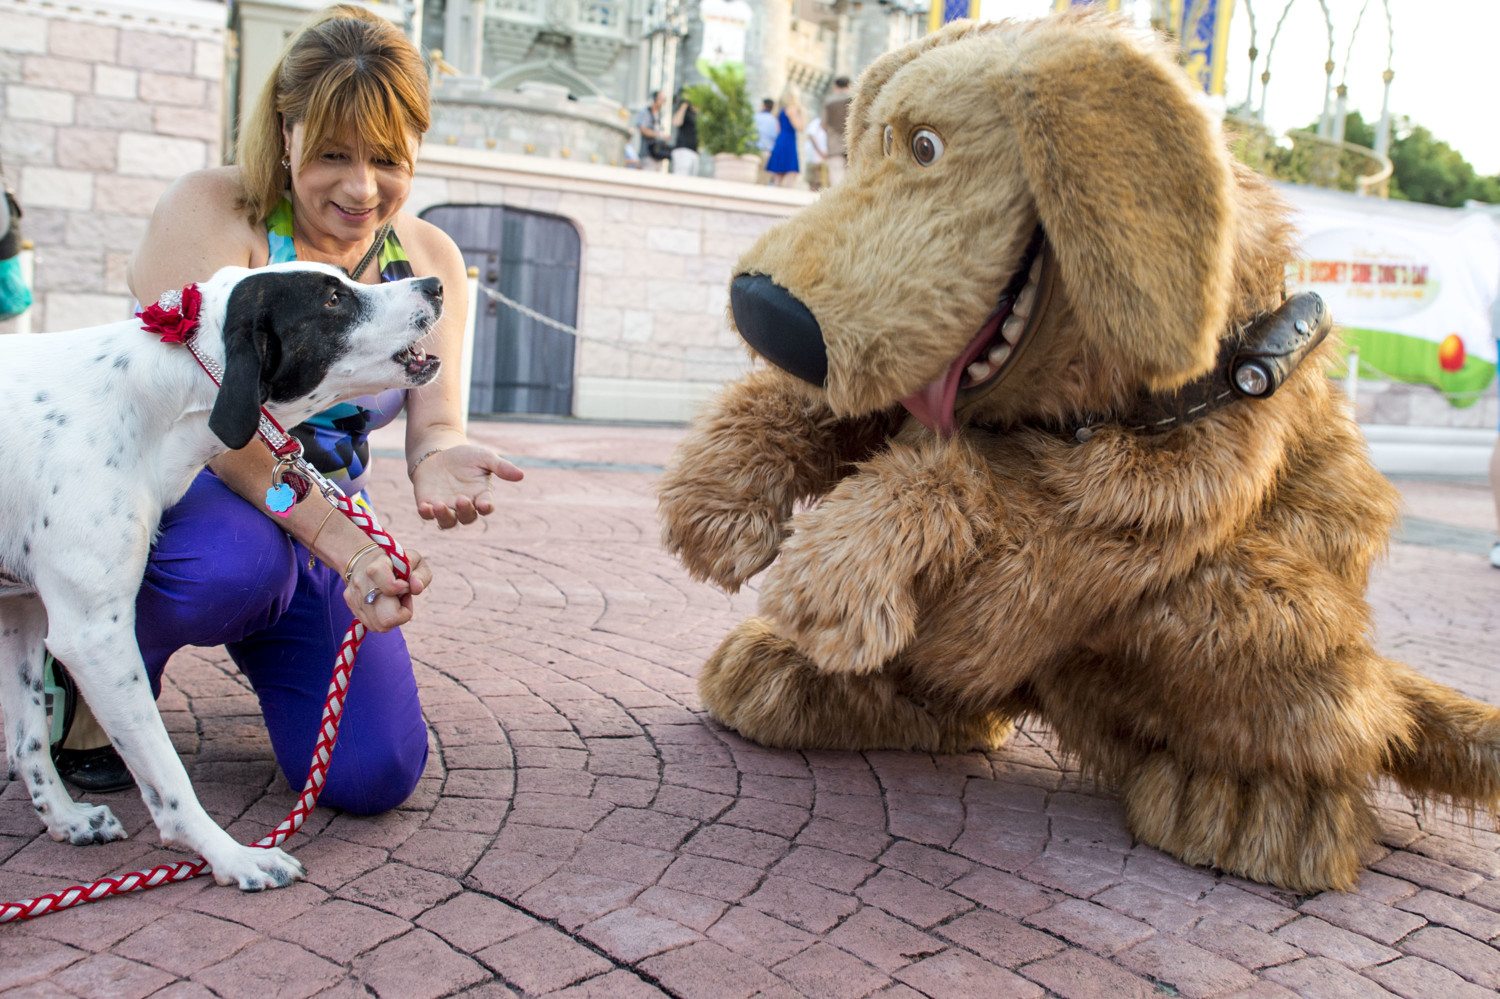 101 Dogs Visit Walt Disney World For Animal Planet TV Special